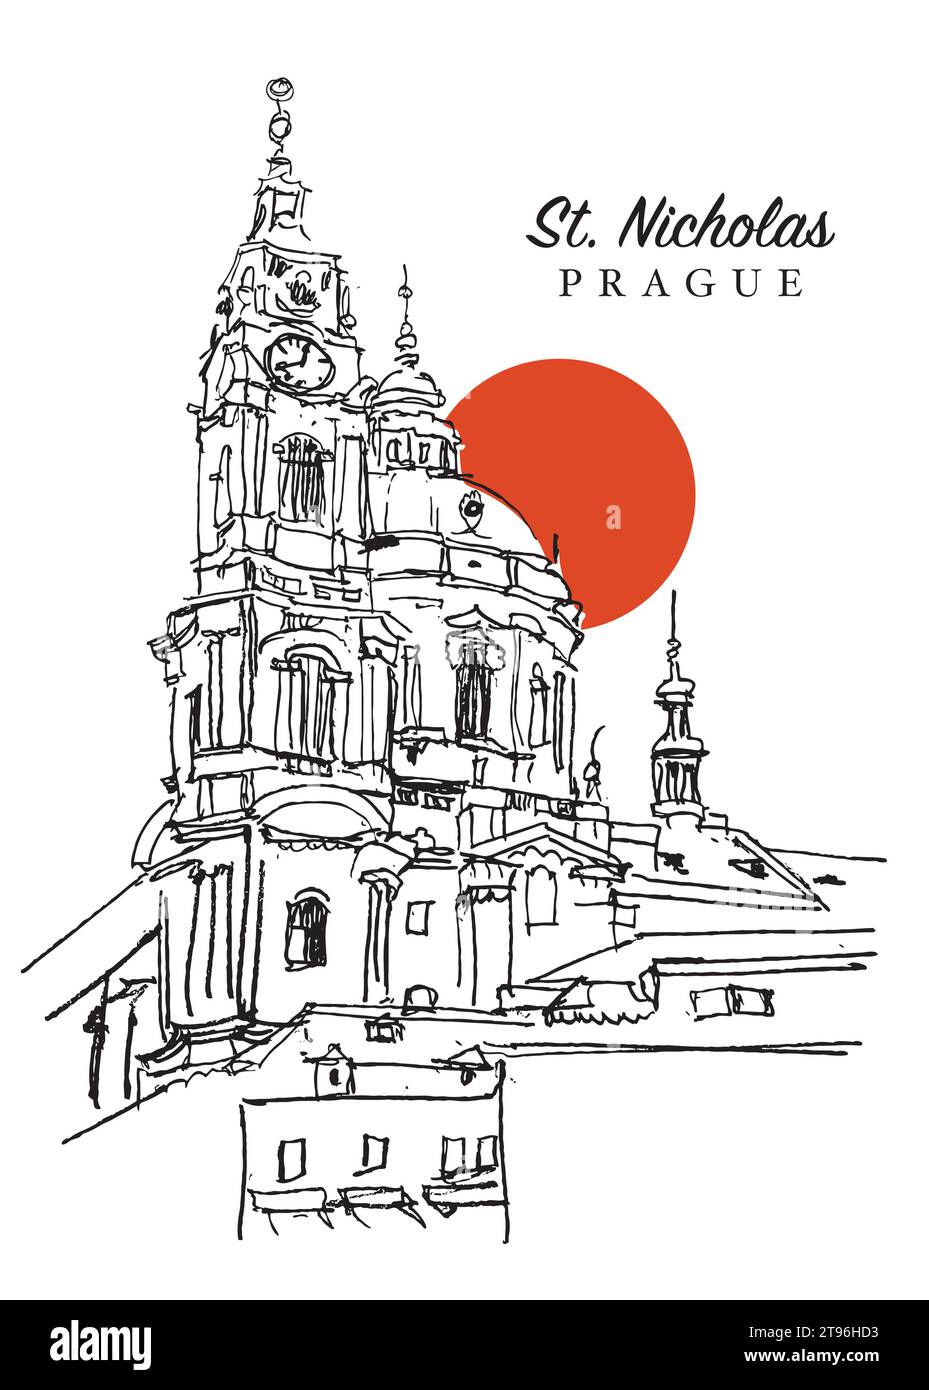 Vector hand drawn sketch illustration of St. Nicholas Church in Prague, Czechia. Stock Vector